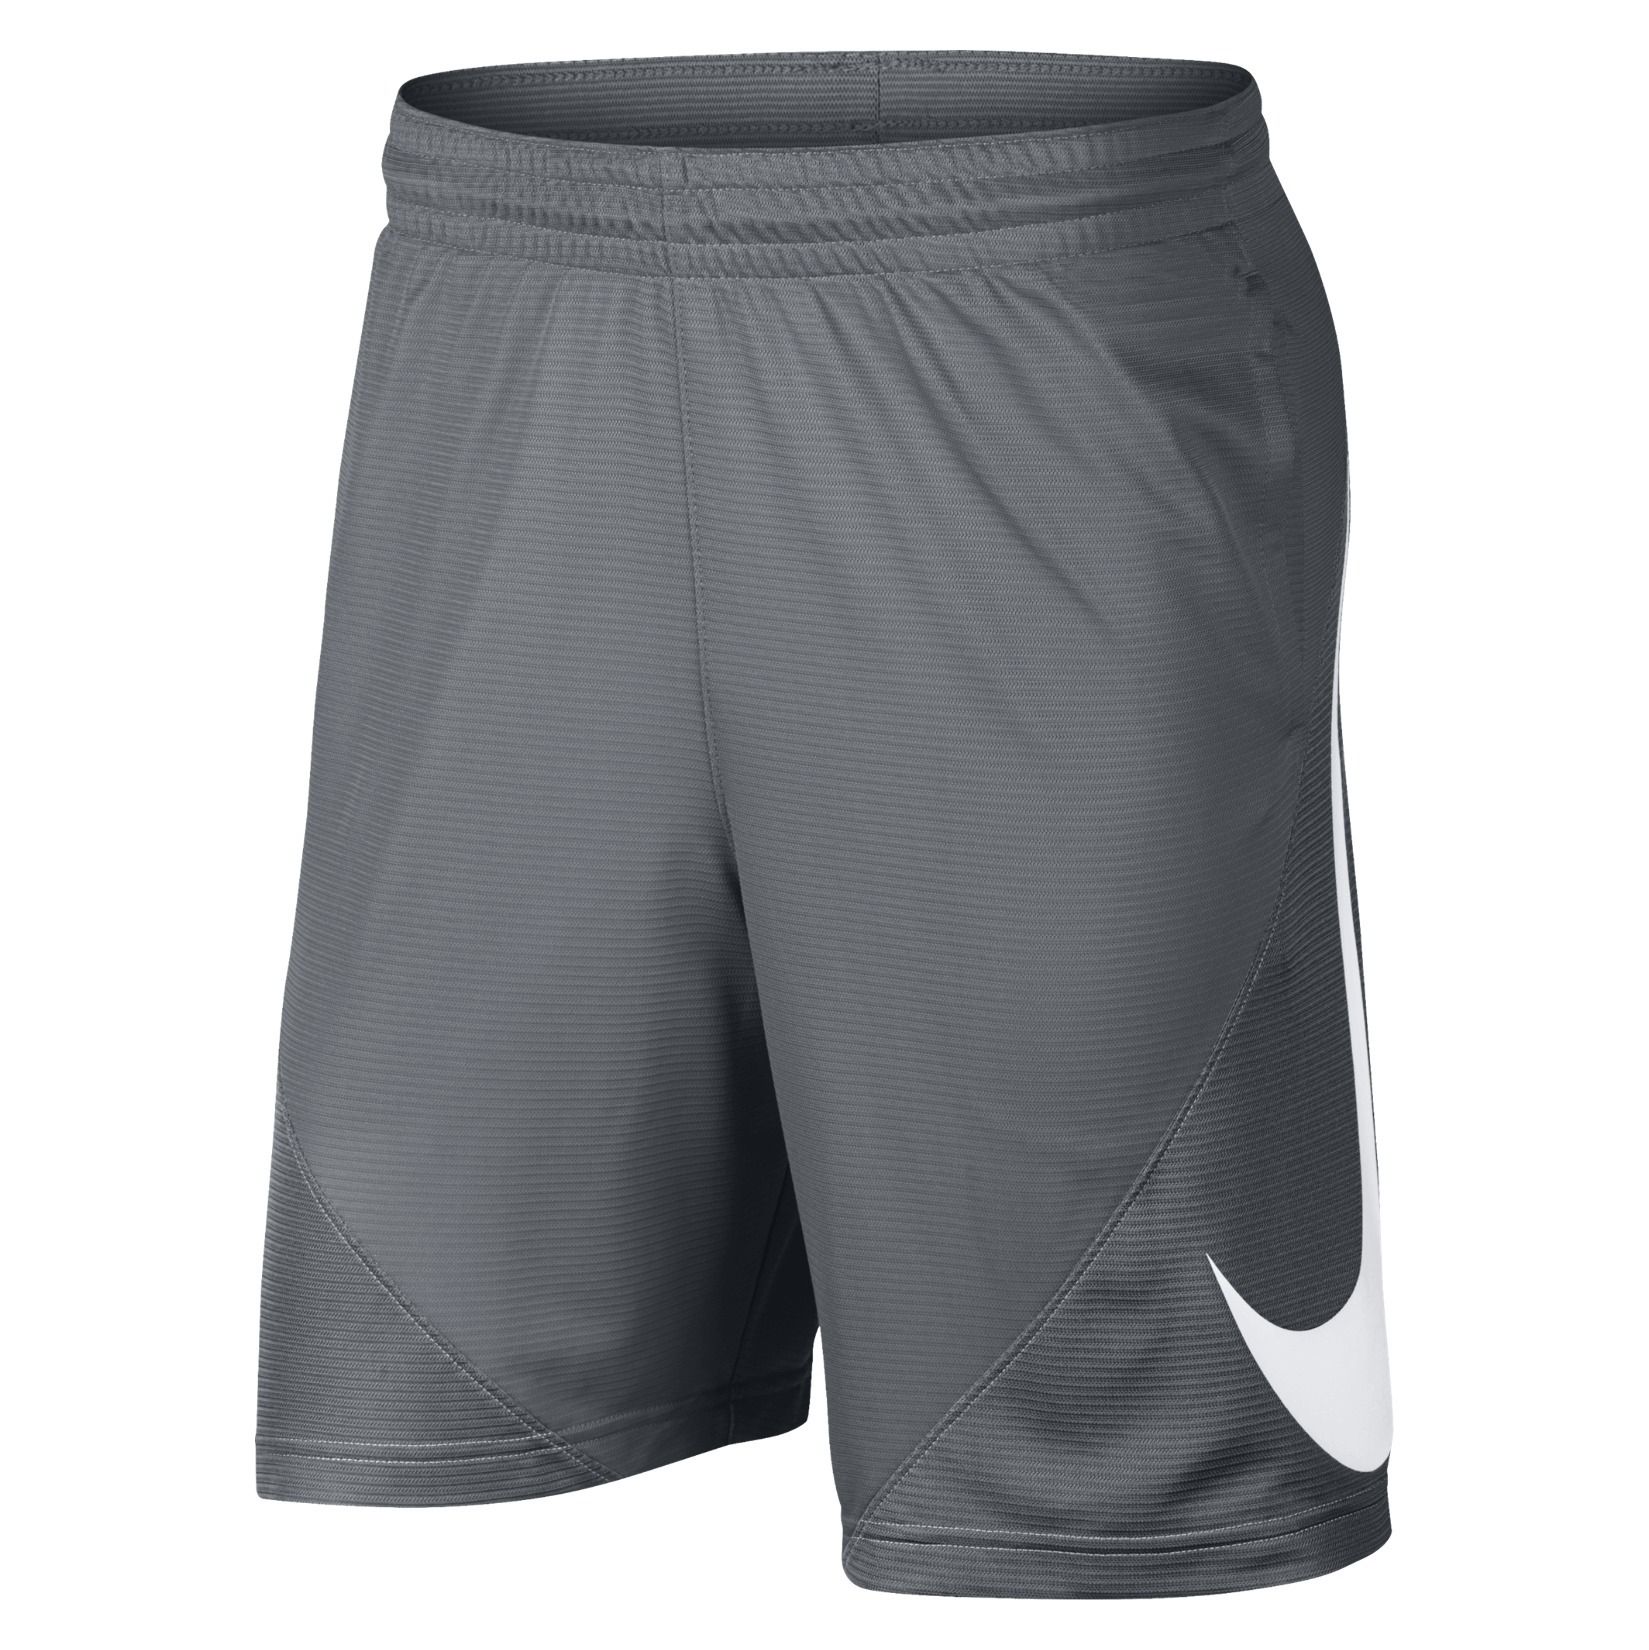 Nike Basketball Shorts - Kitlocker.com